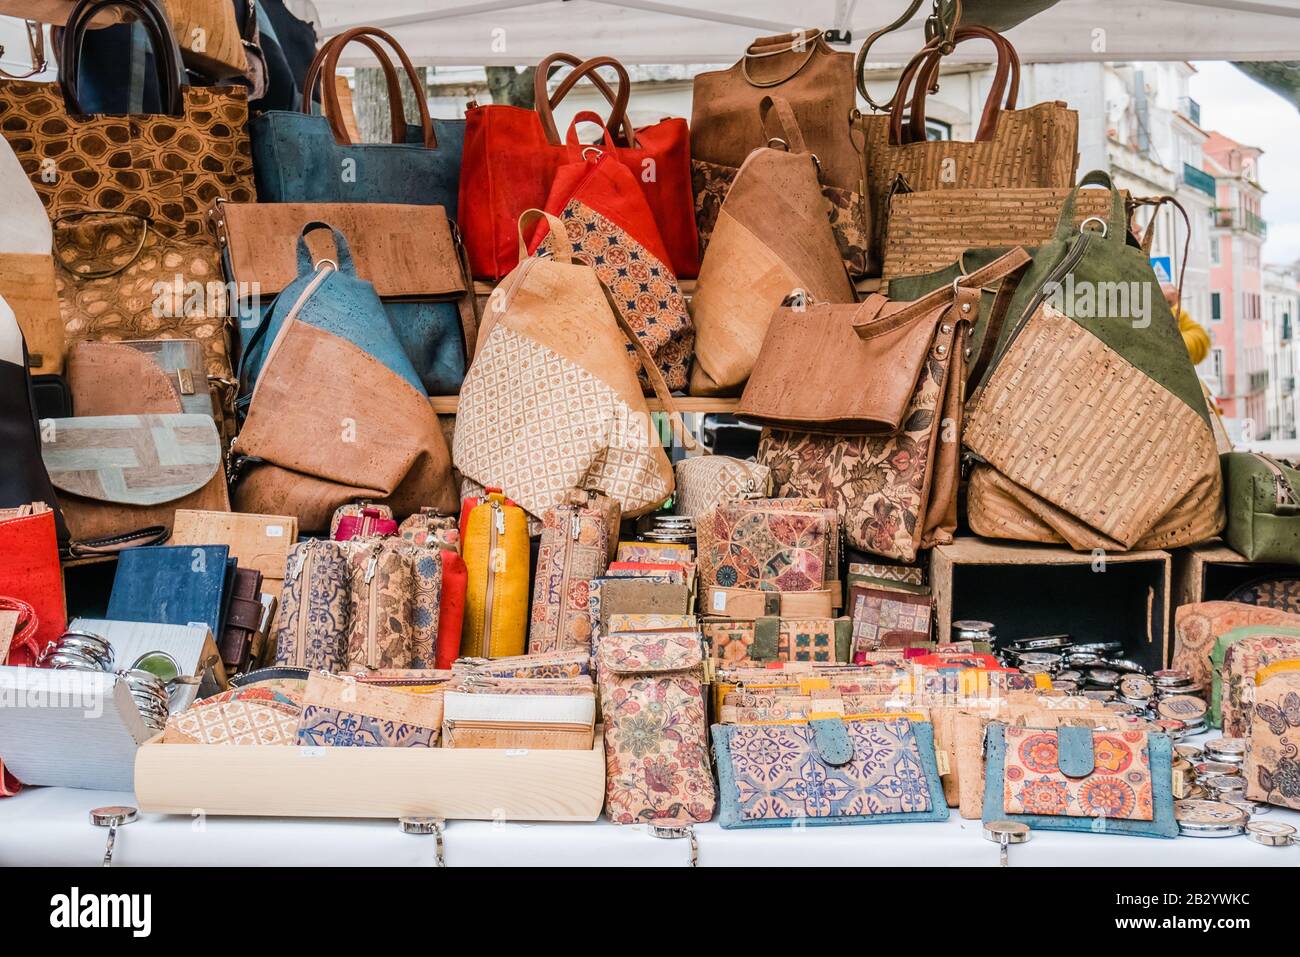 Ralph Lauren Handbags / Purses − Sale: up to −62% | Stylight